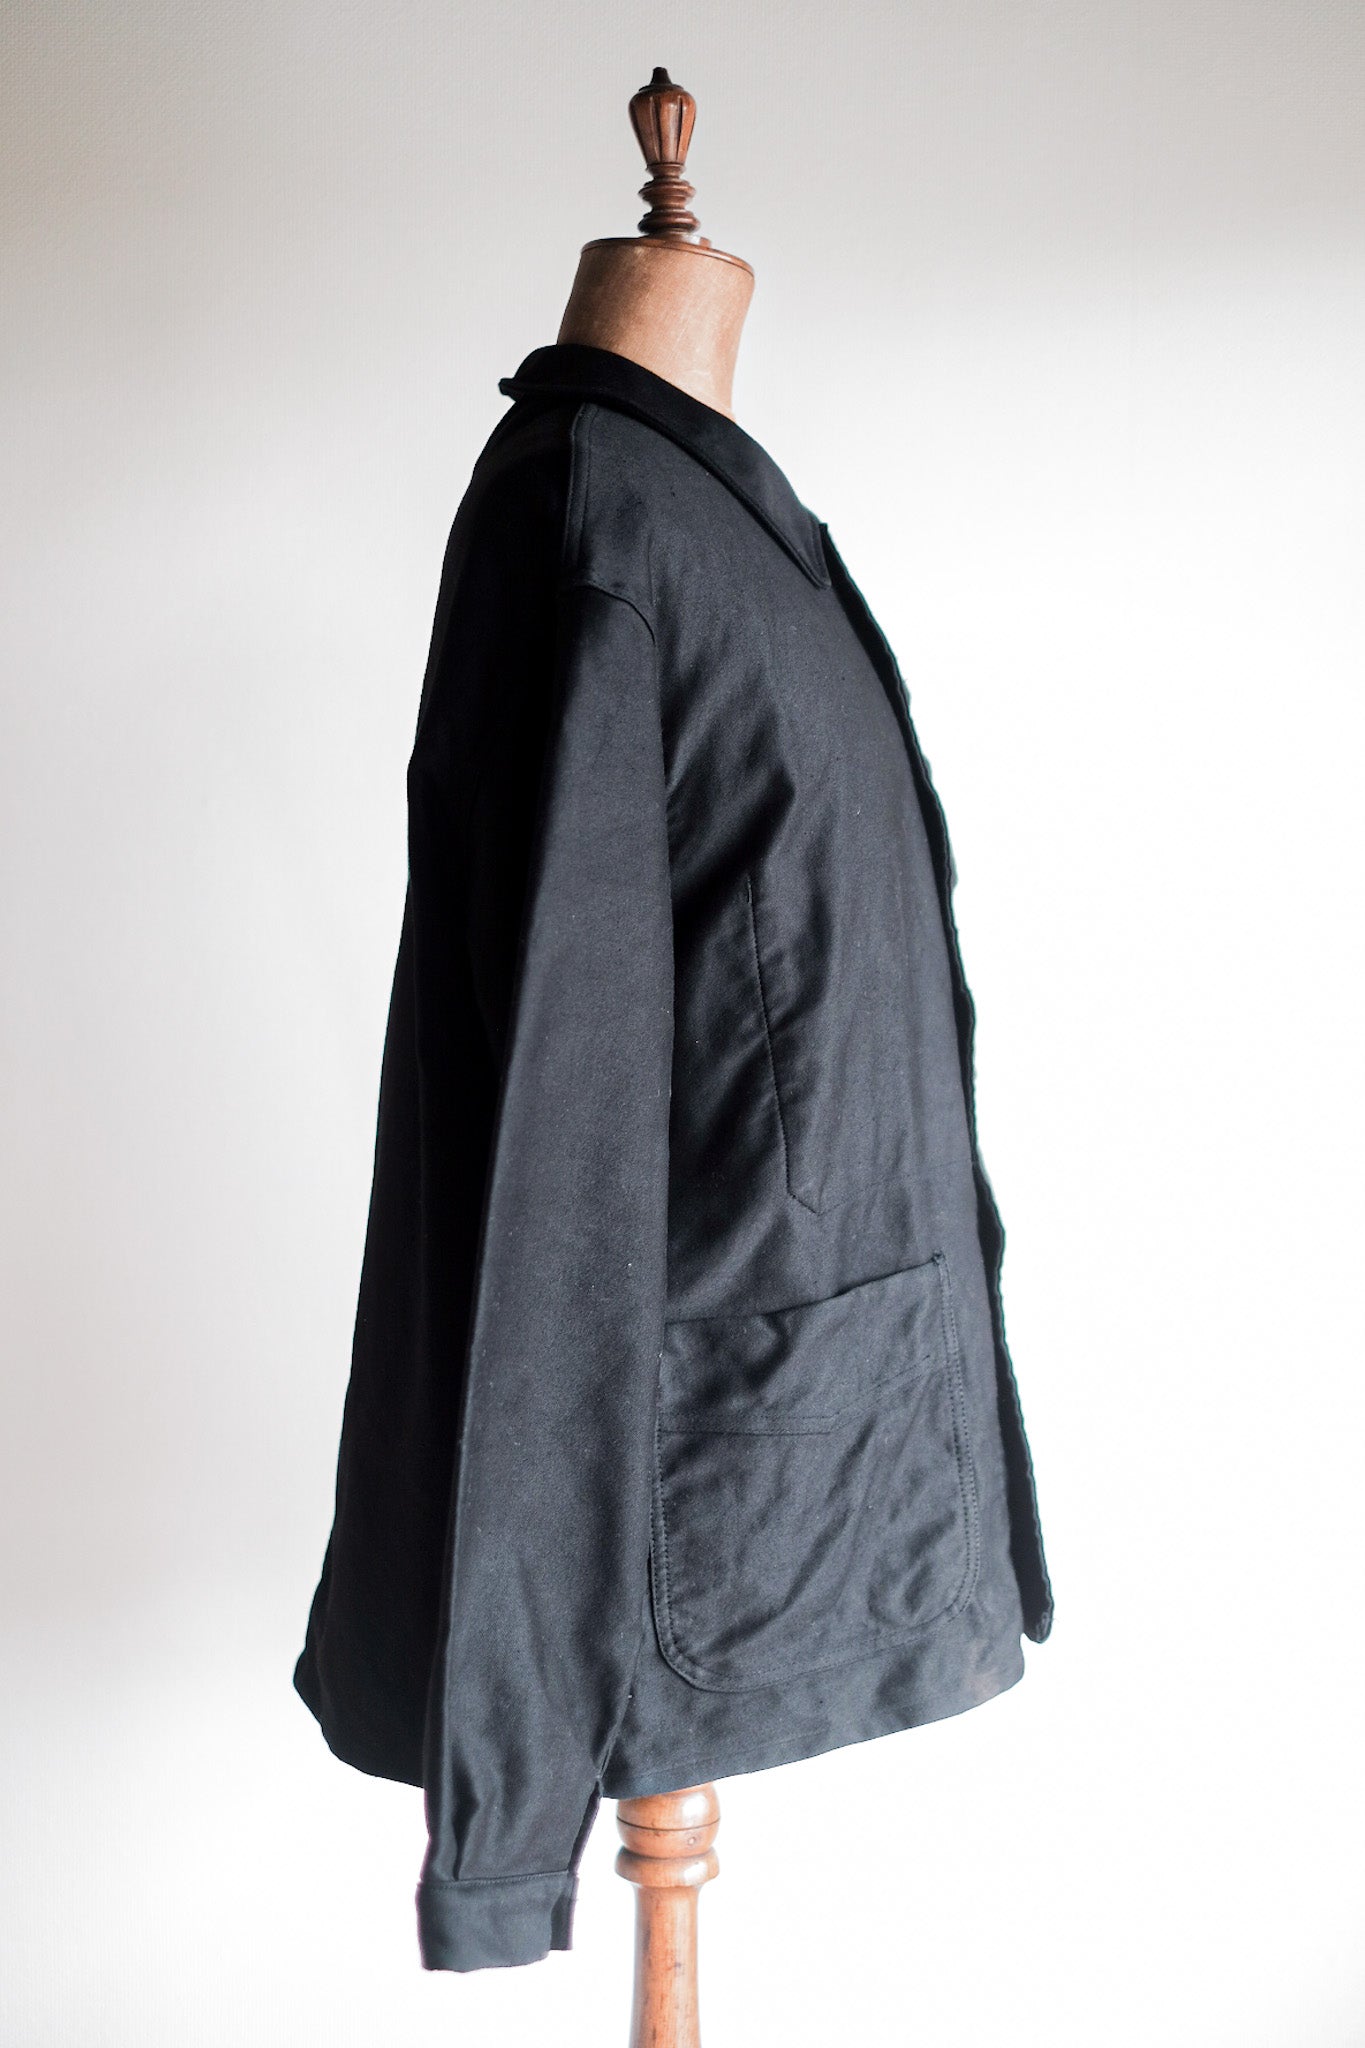 [~ 50's] French Vintage Black Moleskin Work Jacket "Adolphe Lafont" "Dead Stock"